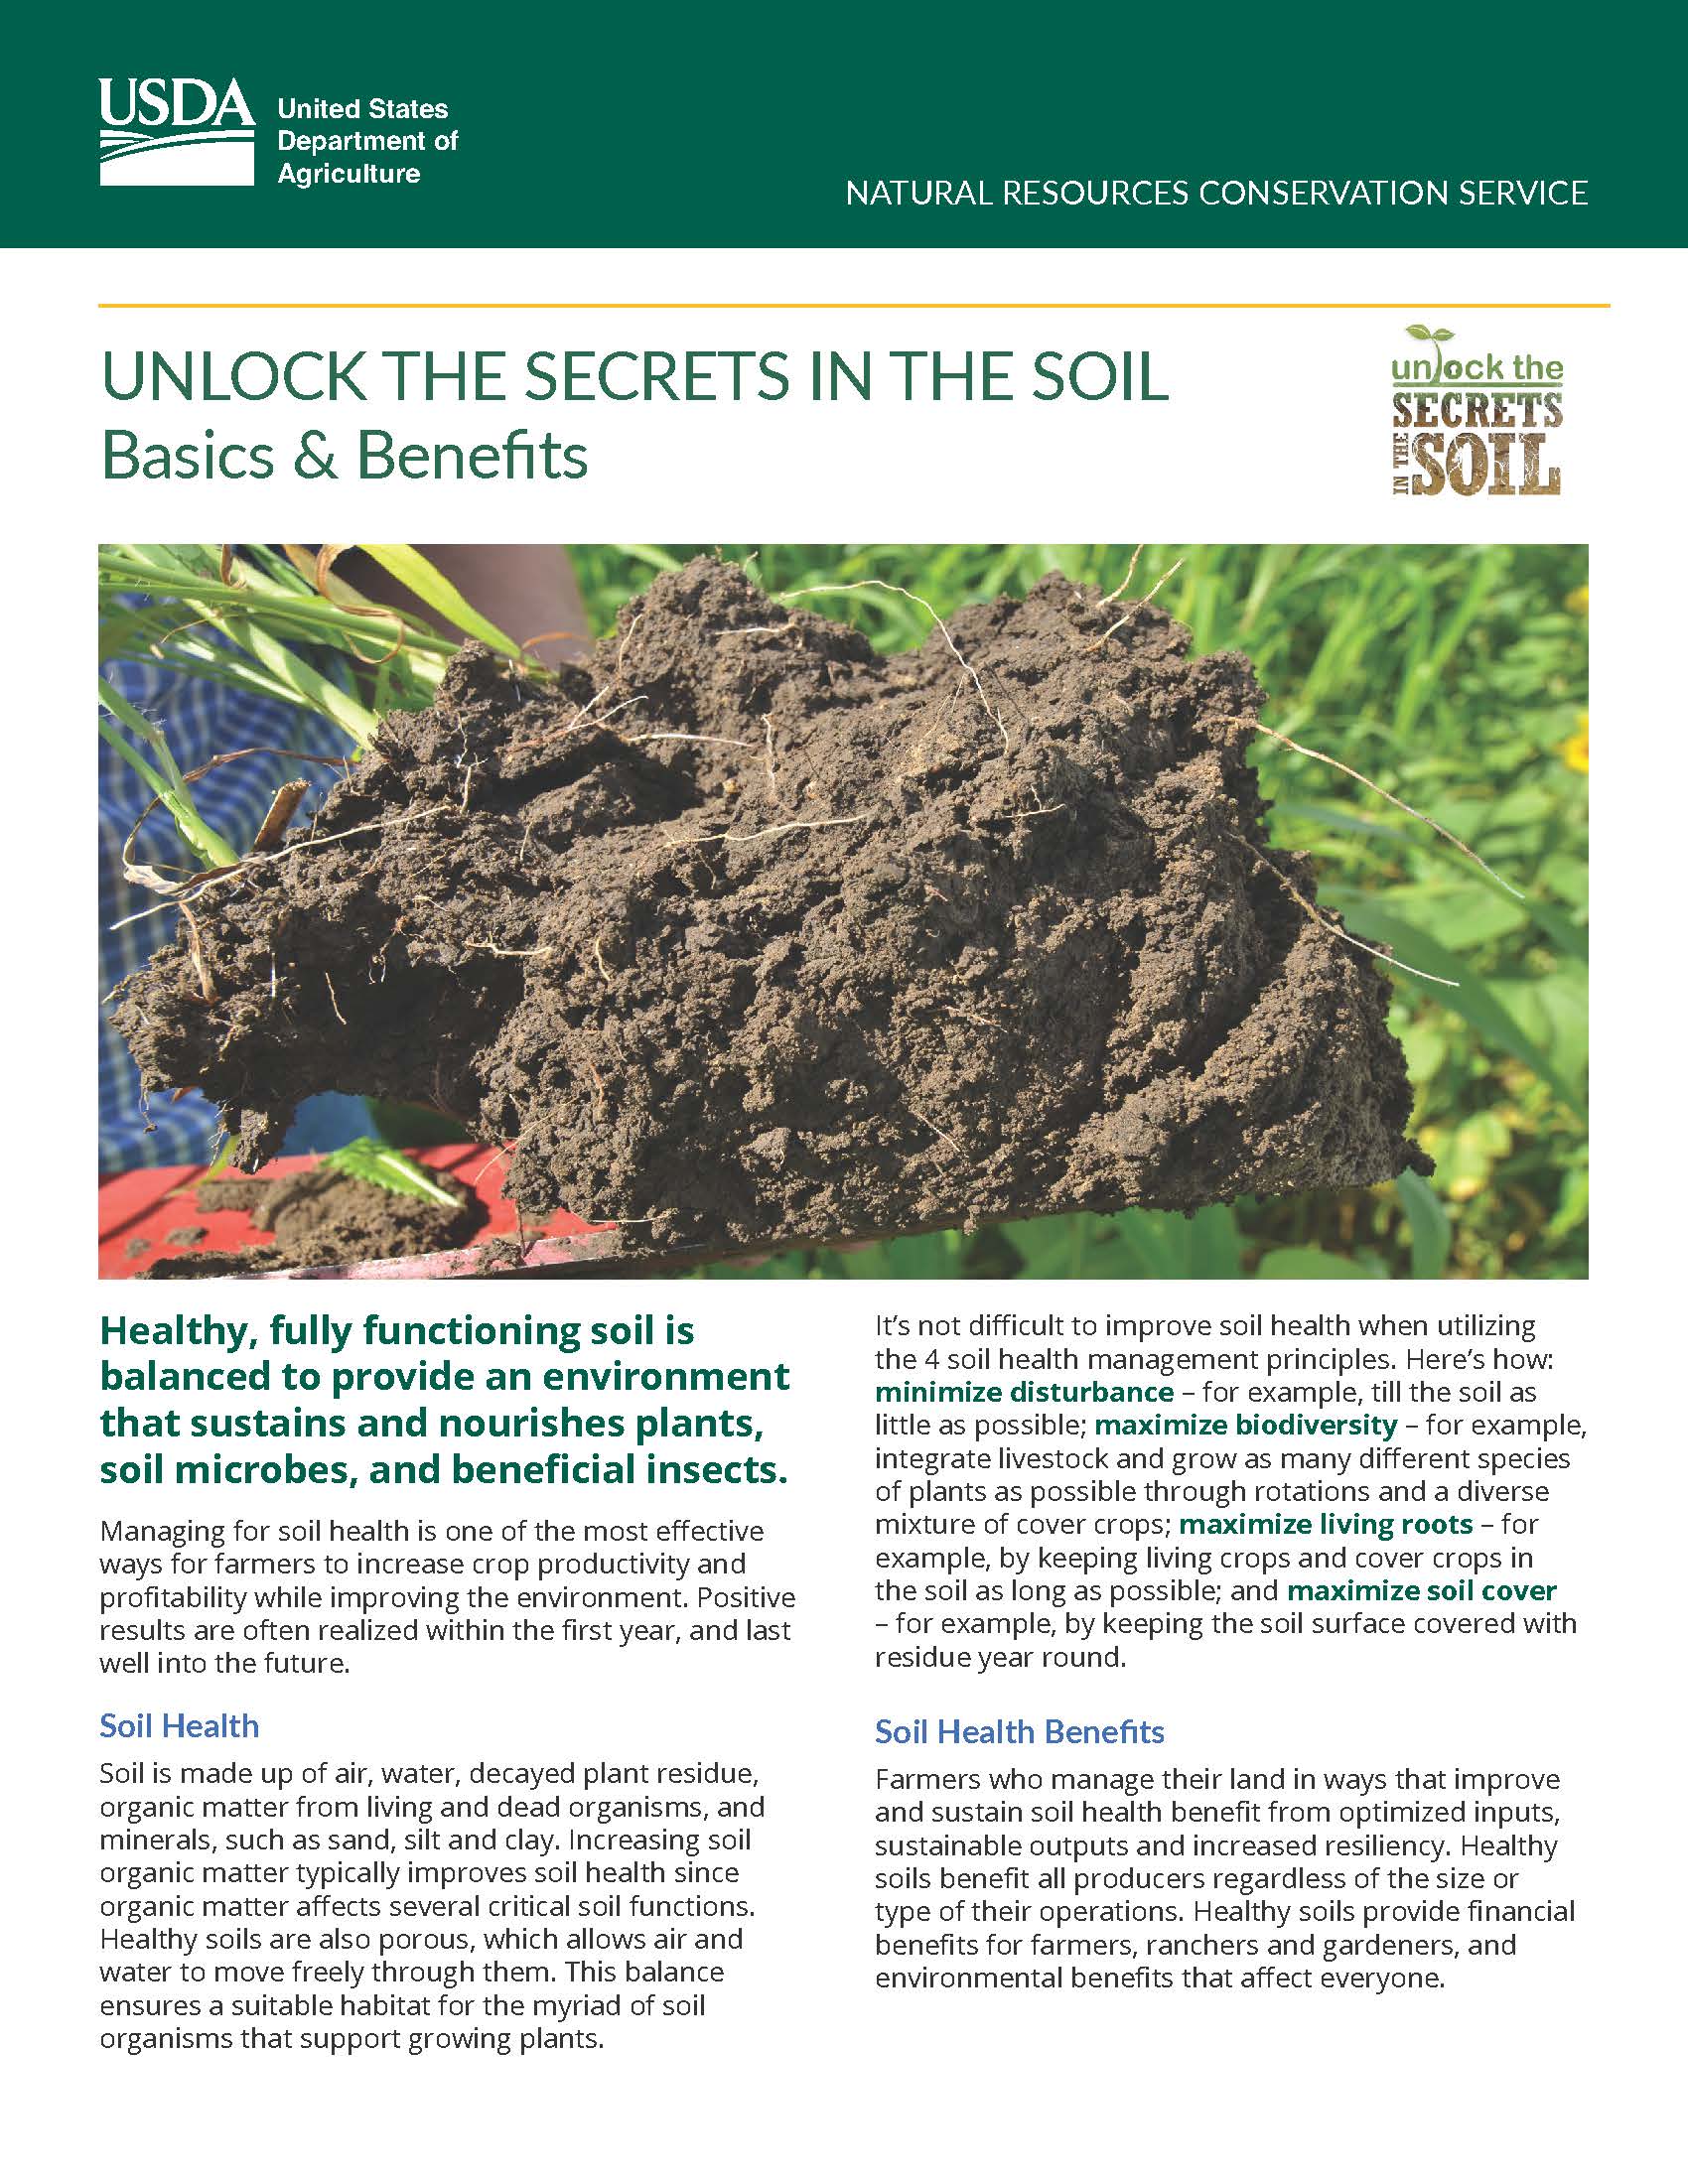 Soil Health Basics and Benefits fact sheet